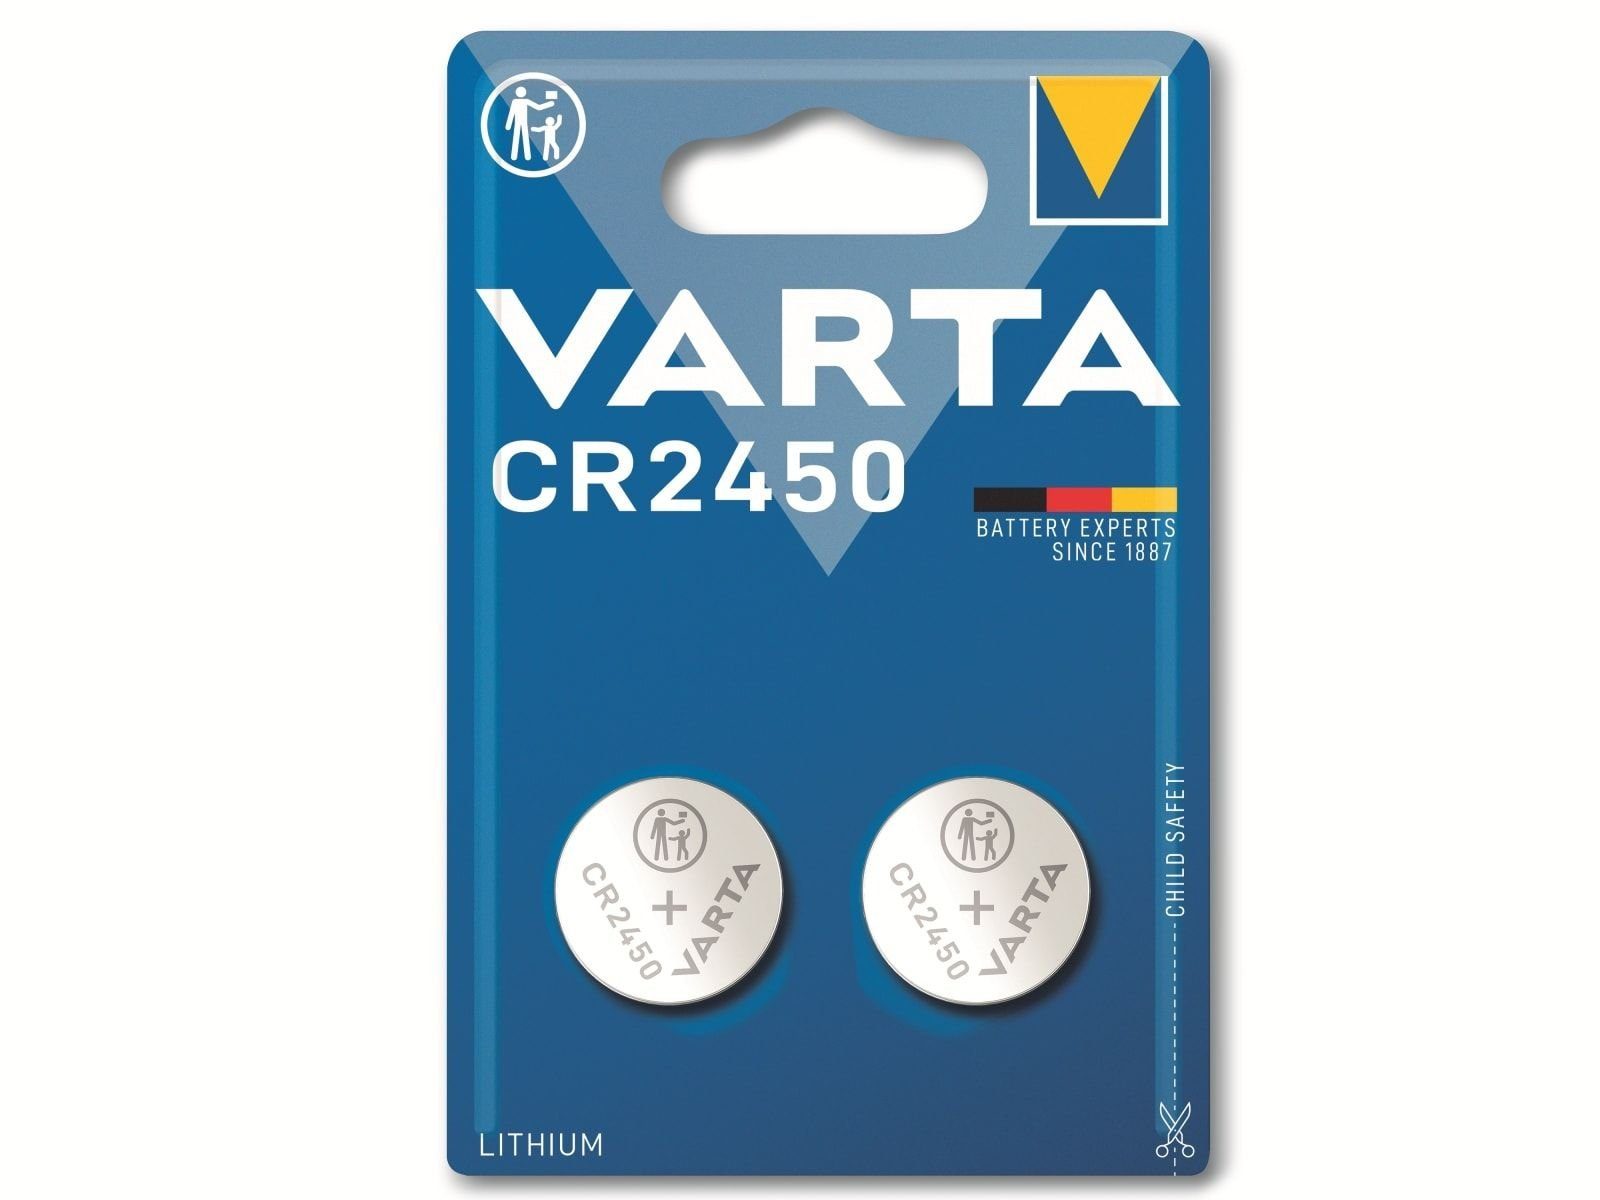 VARTA VARTA Knopfzelle Lithium, CR2450, 3V 2 Stück Knopfzelle